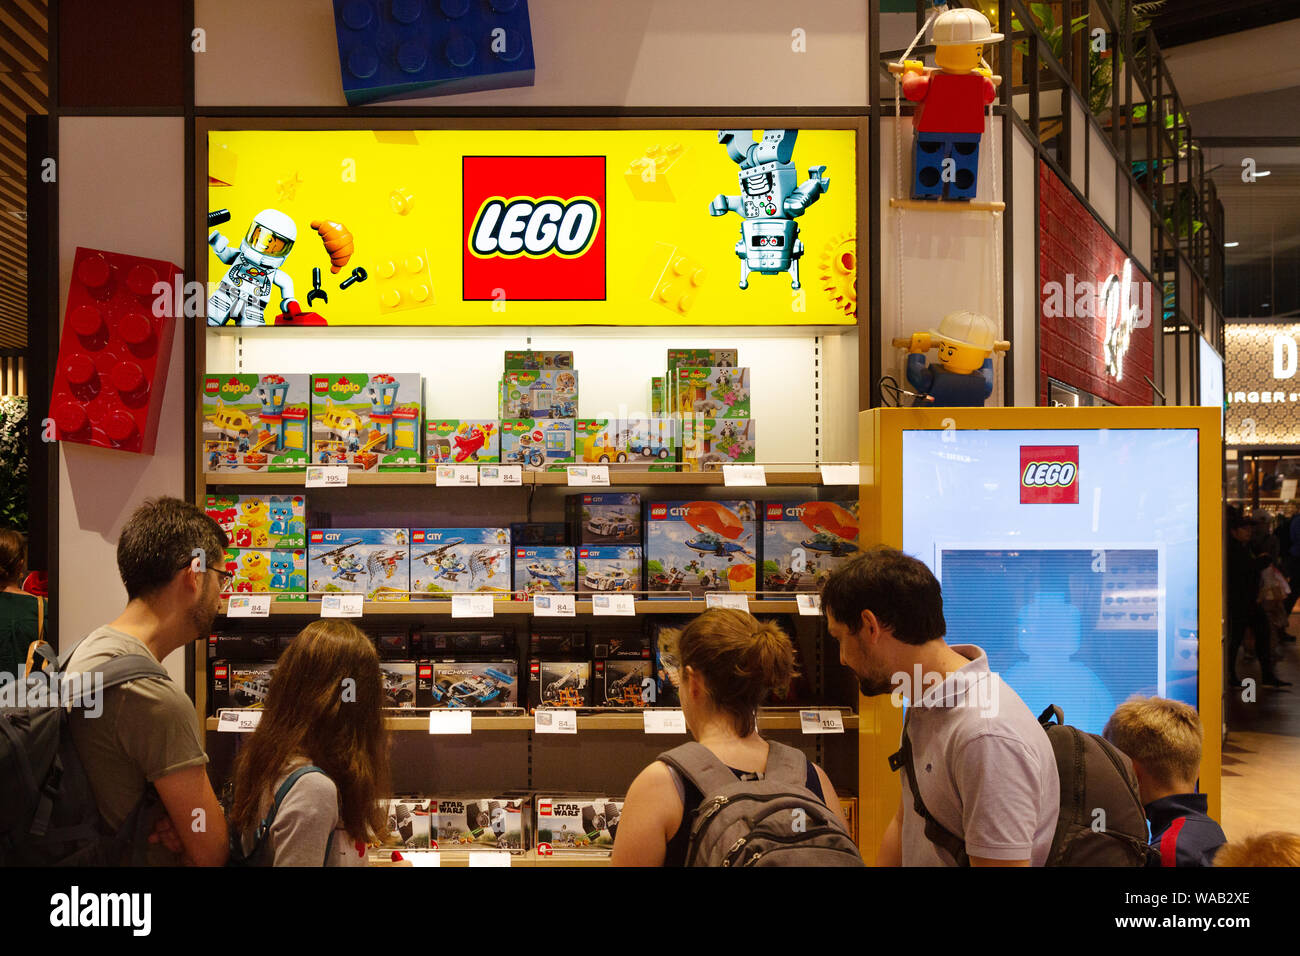 Lego Denmark - people buying lego at a lego shop, Copenhagen airport,  Copenhagen, Denmark Scandinavia Stock Photo - Alamy